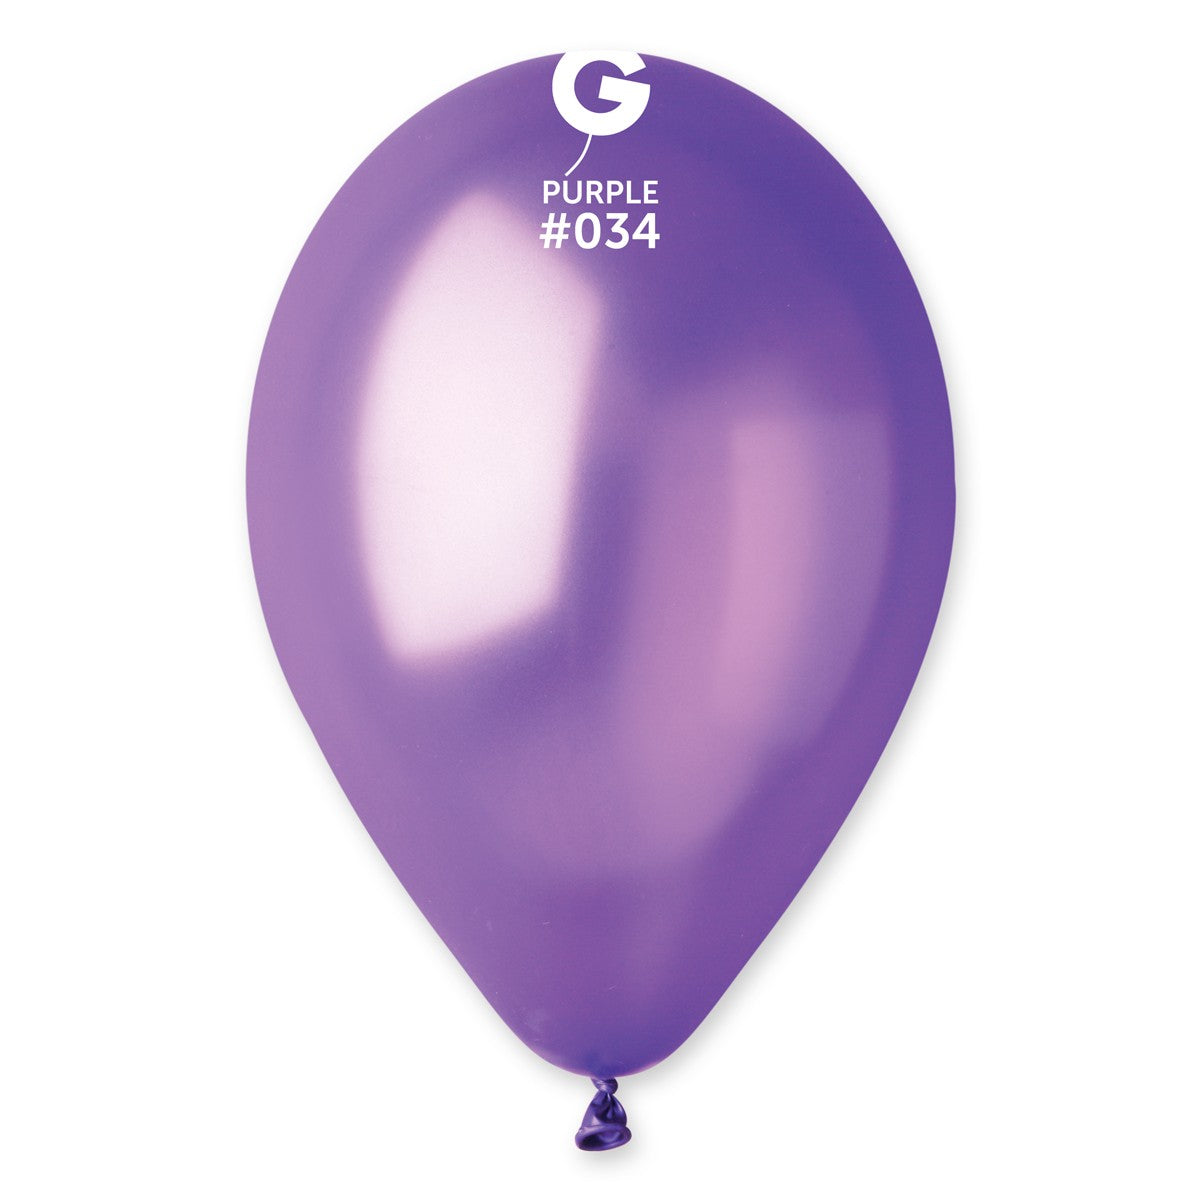 Treasures Gifted Metallic Lavender Balloons - Purple Latex Balloons - 12  Inch Balloons Purple - Pearl Balloons - Lilac Balloons - Light Purple